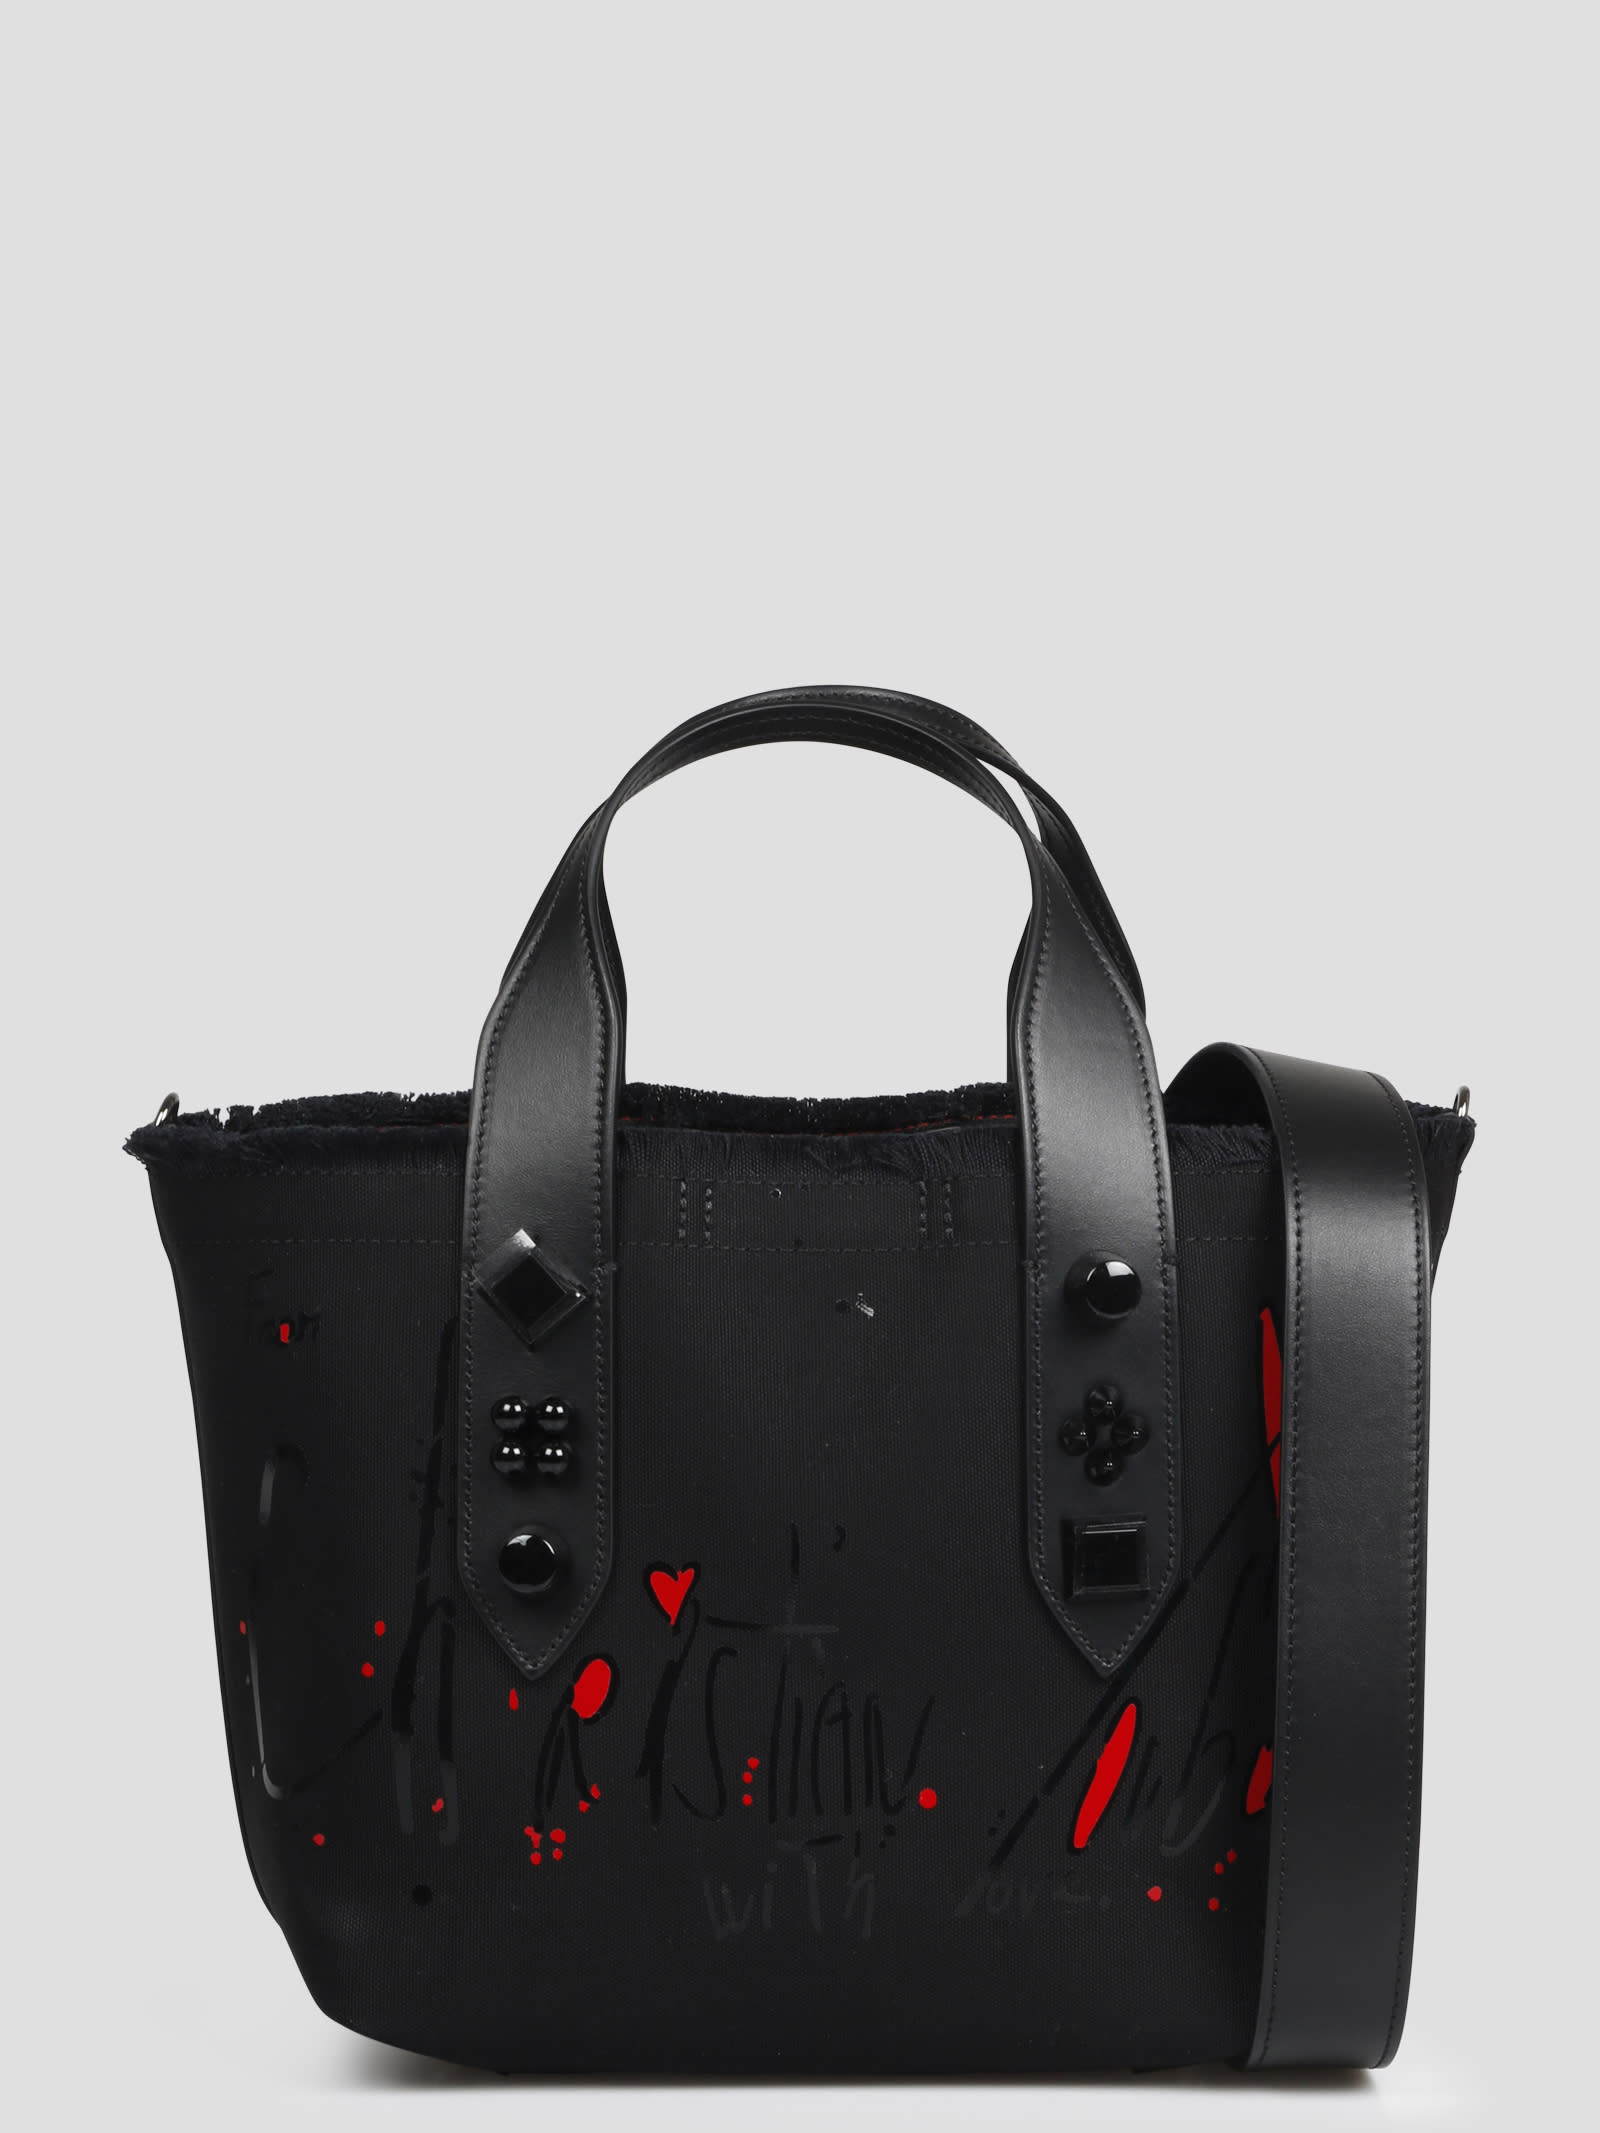 Luxury handbag - Frangibus Christian Louboutin small tote bag in